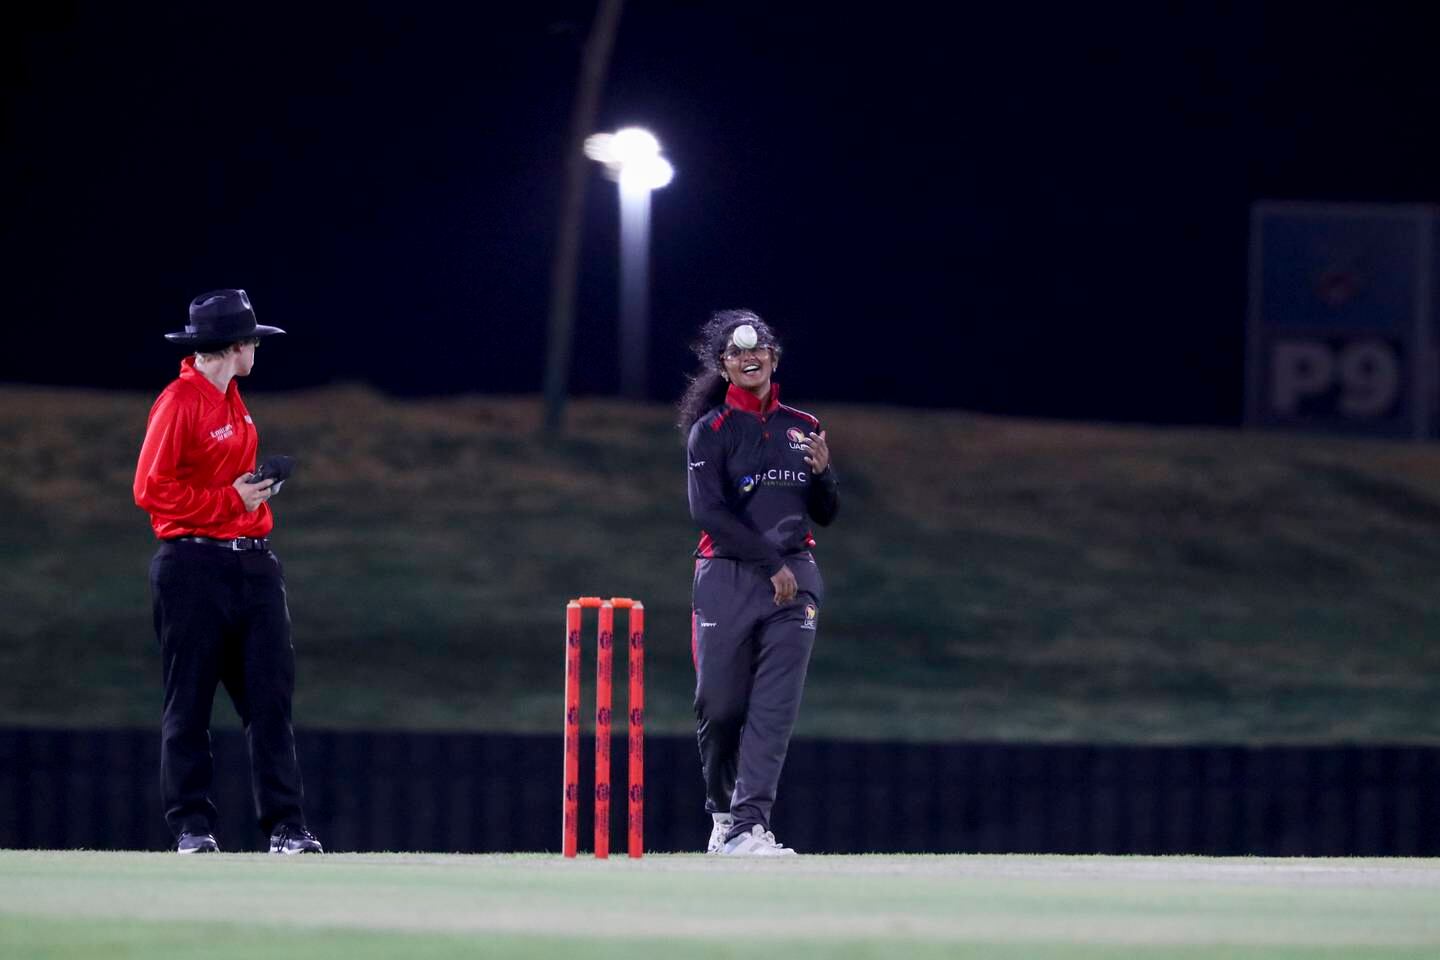 UAE bowler Vaishnave Mahesh in action. Khushnum Bhandari / The National